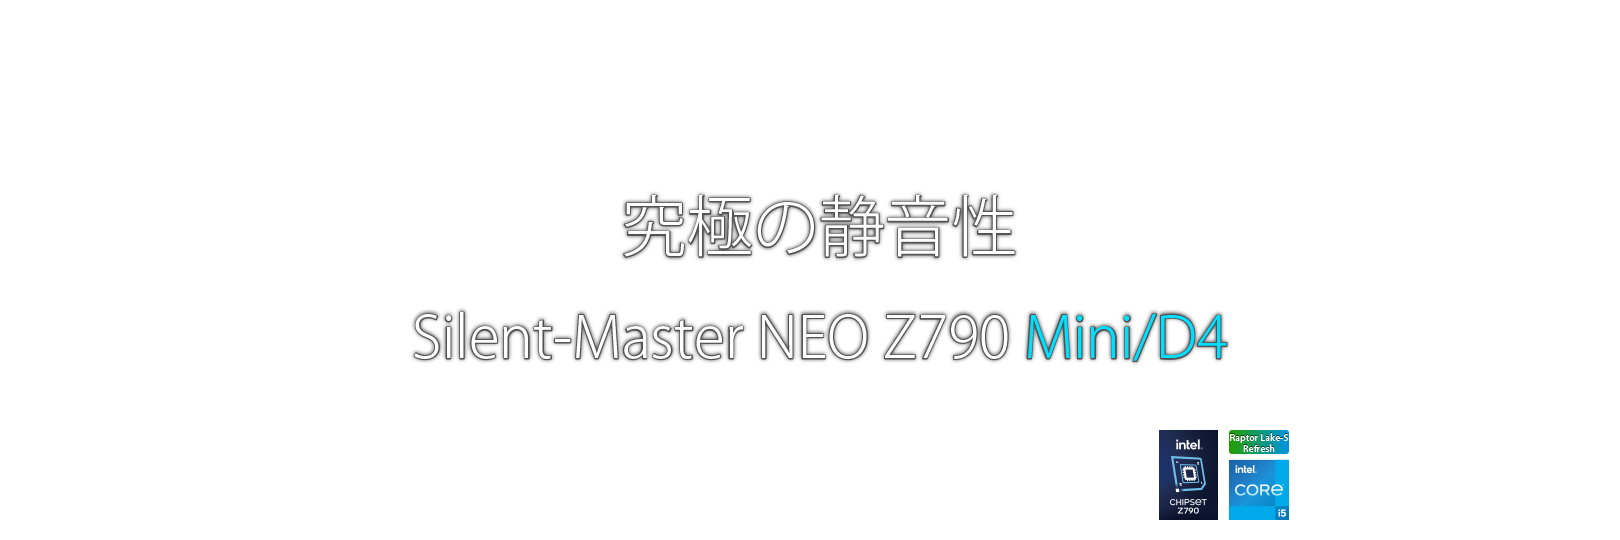 Silent-Master NEO Z690 Mini/D4